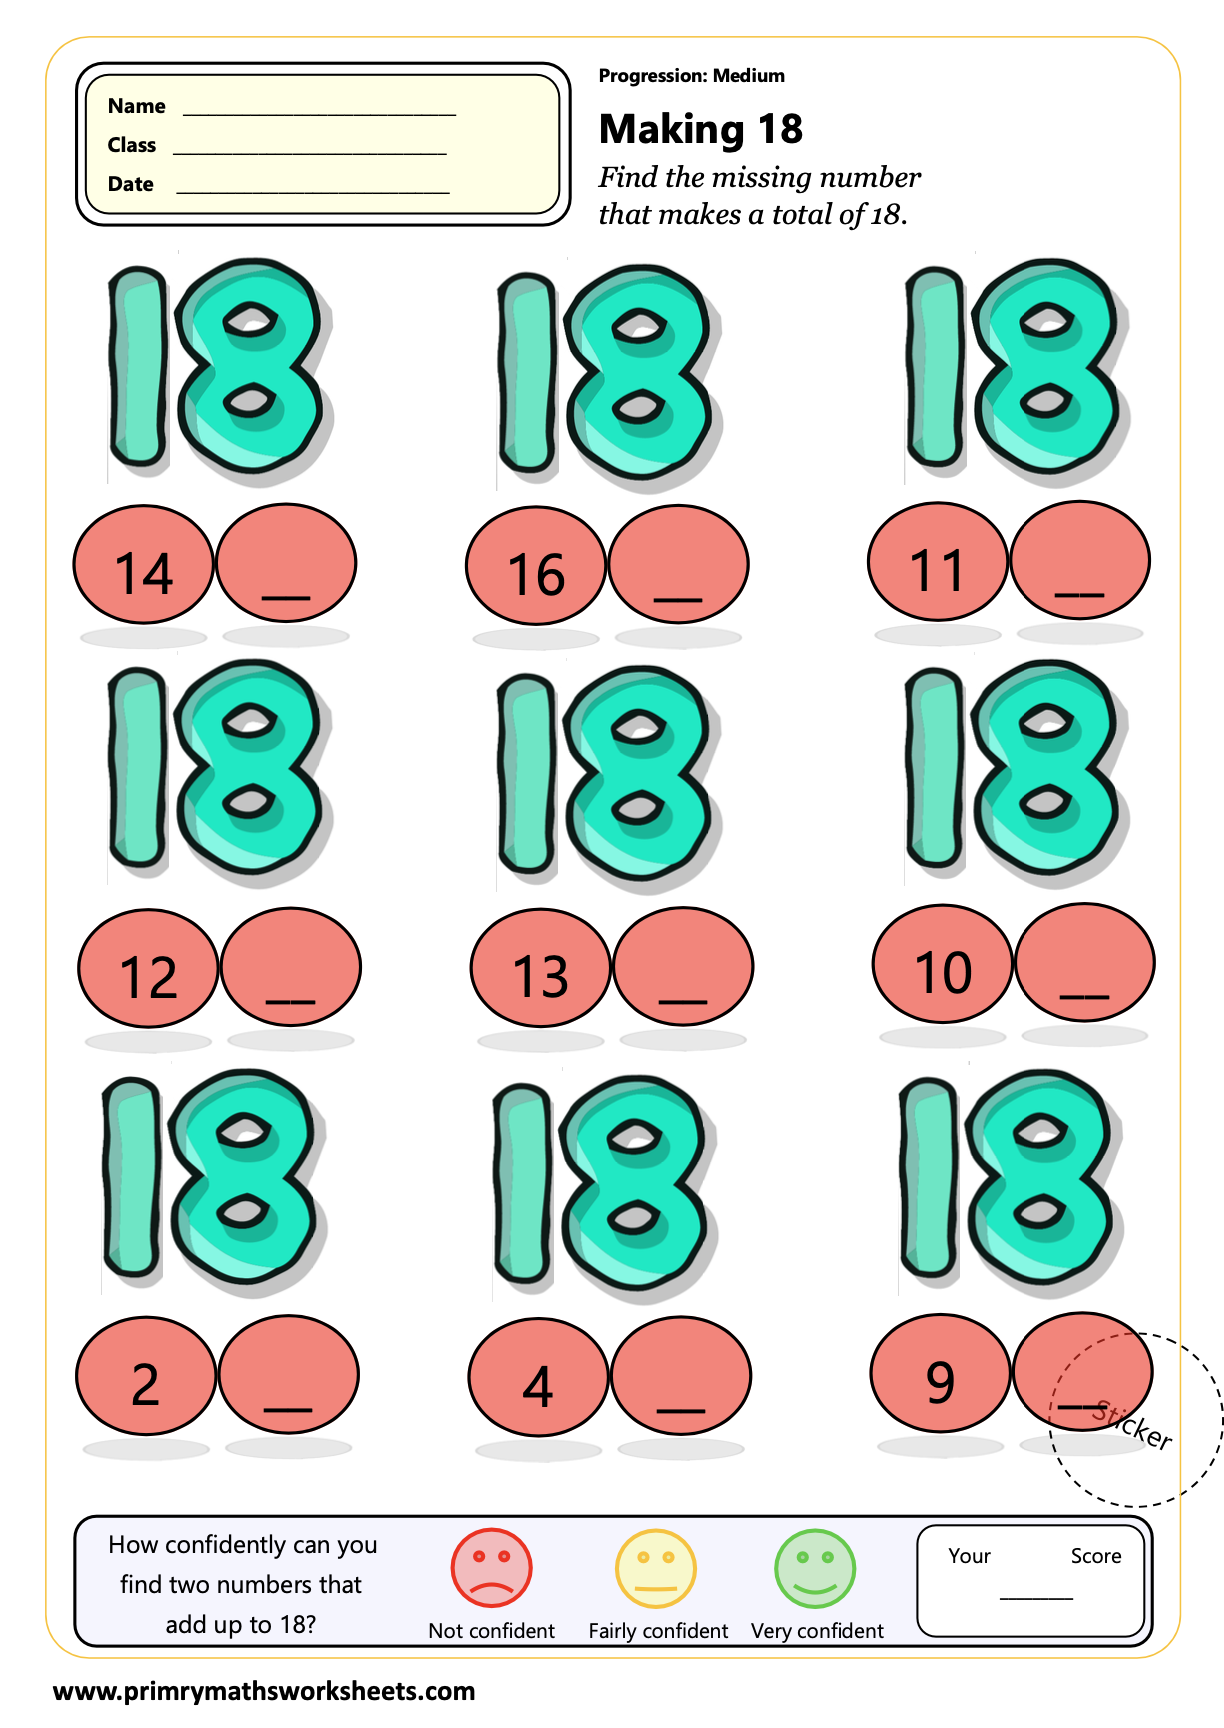 Adding Making 18 - Primary Maths Worksheets